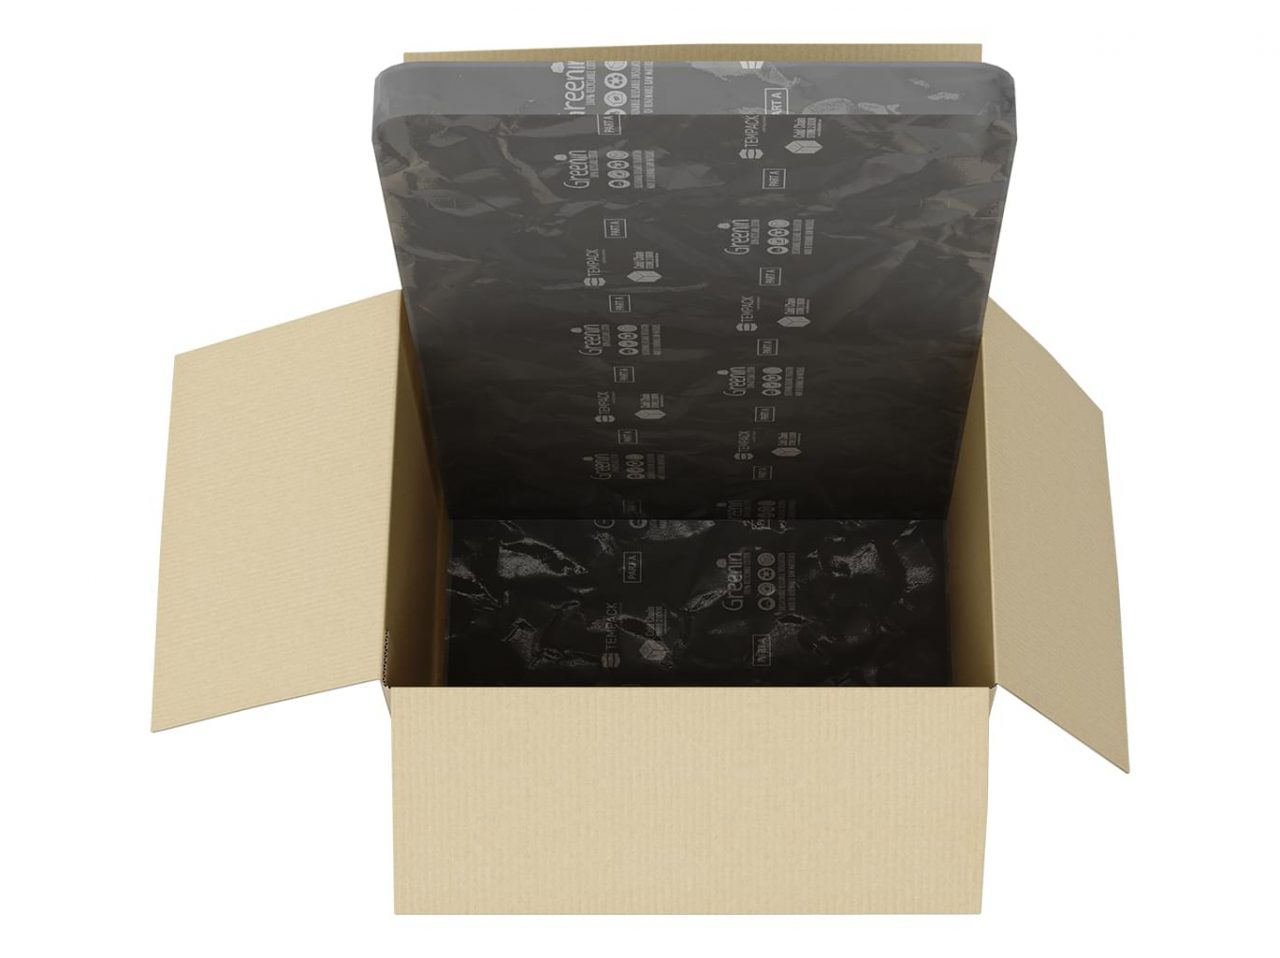 tempack-greenin-su-sustainable-insulated-packaging-2@2x-1280x958